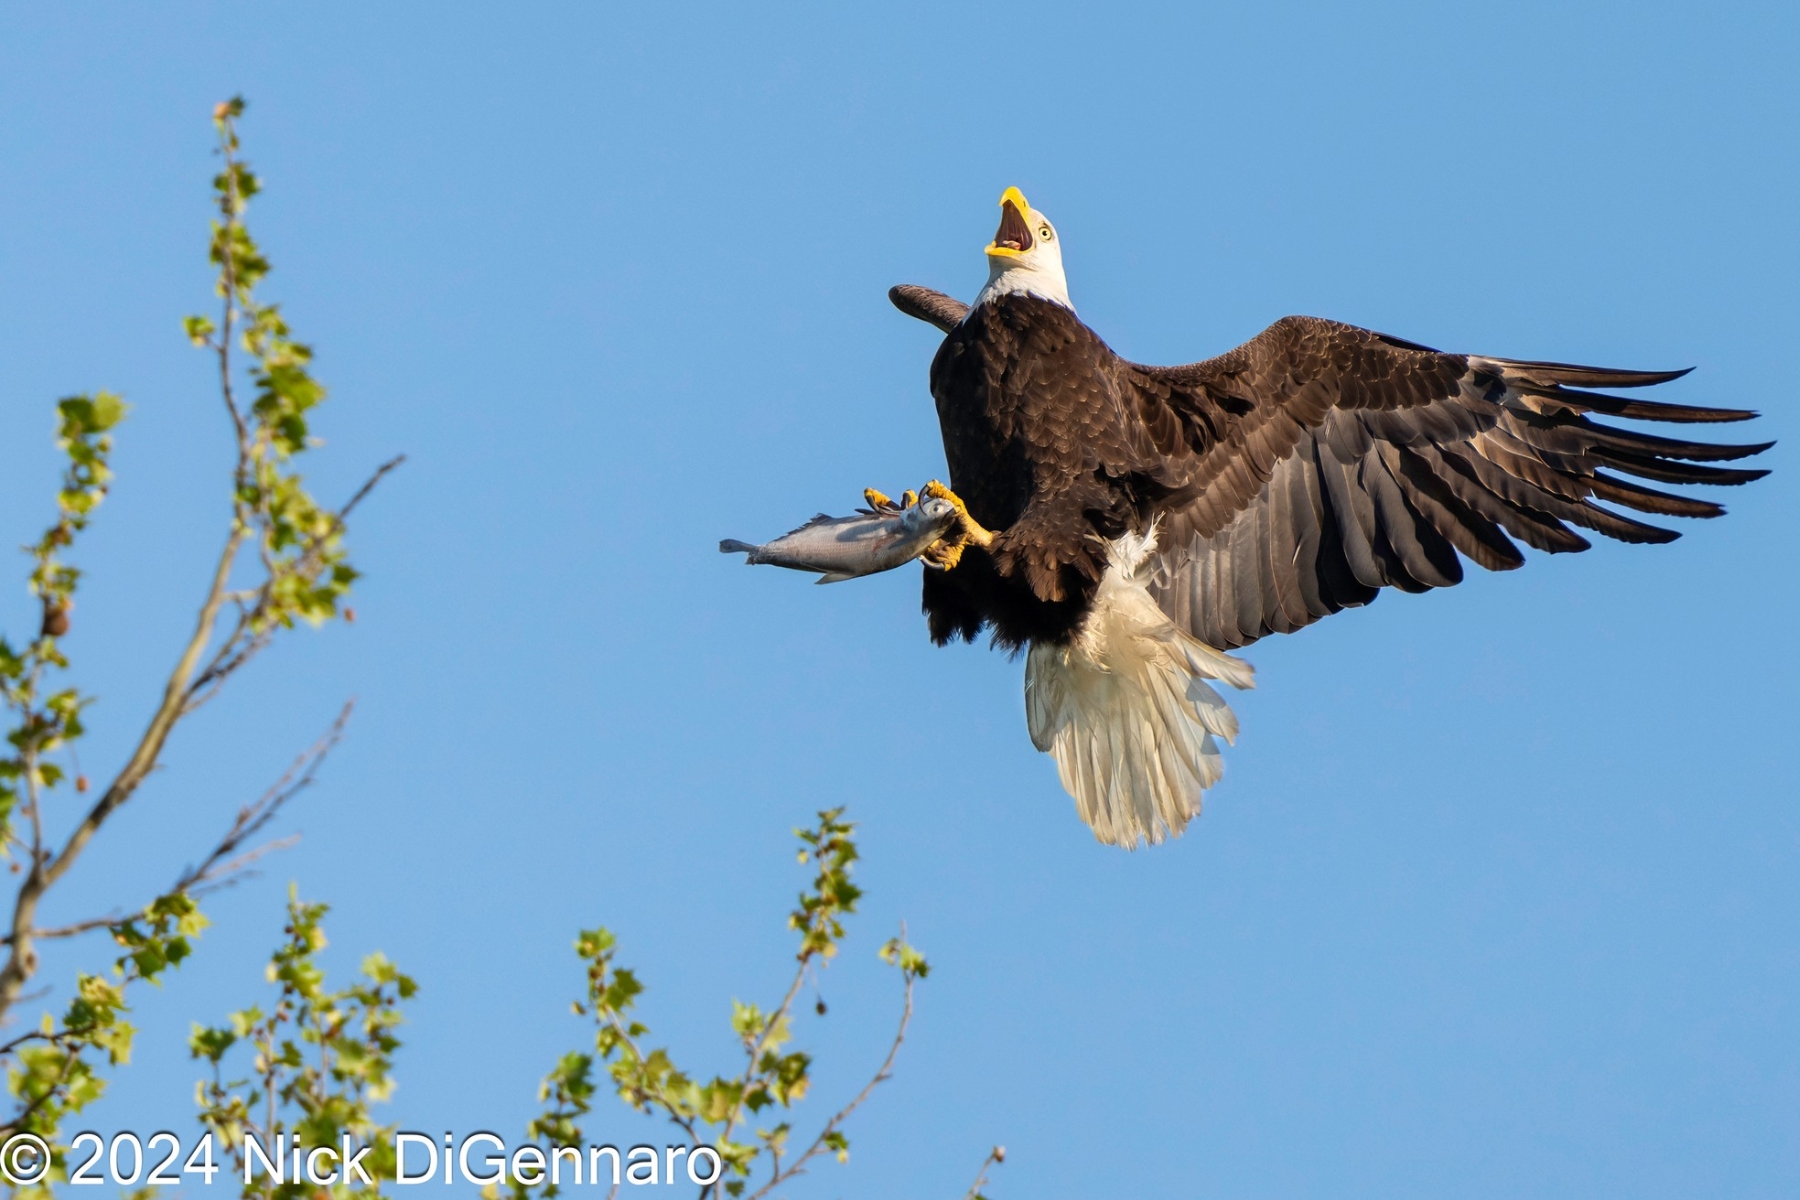 Spectacular Bald Eagle Photos From White Rock Lake